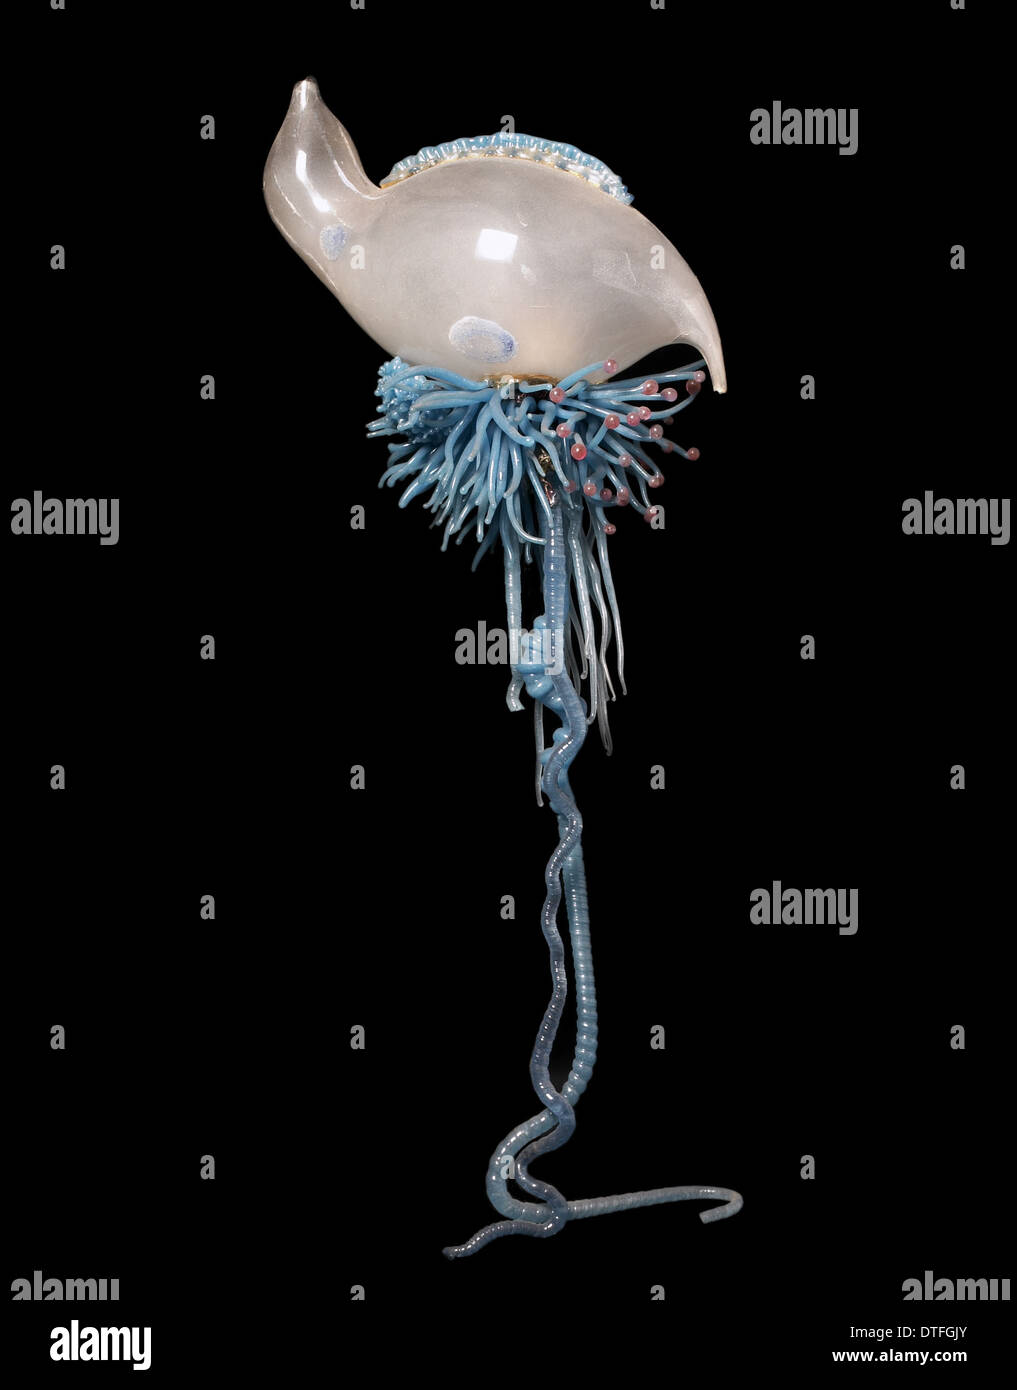 Physalia pelagica, jellyfish model Stock Photo